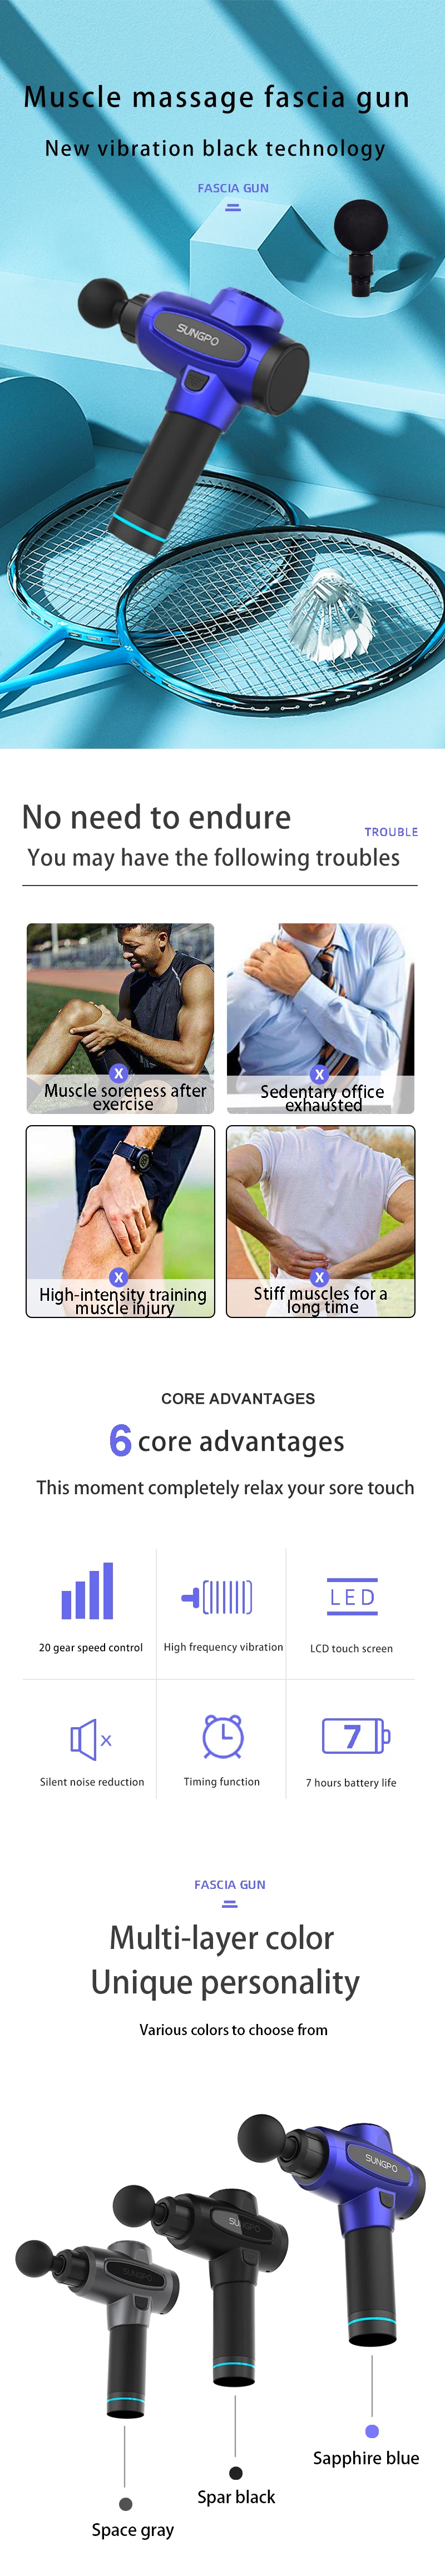 Portable cordless vibration fitness sports massager body relax muscle massage gun